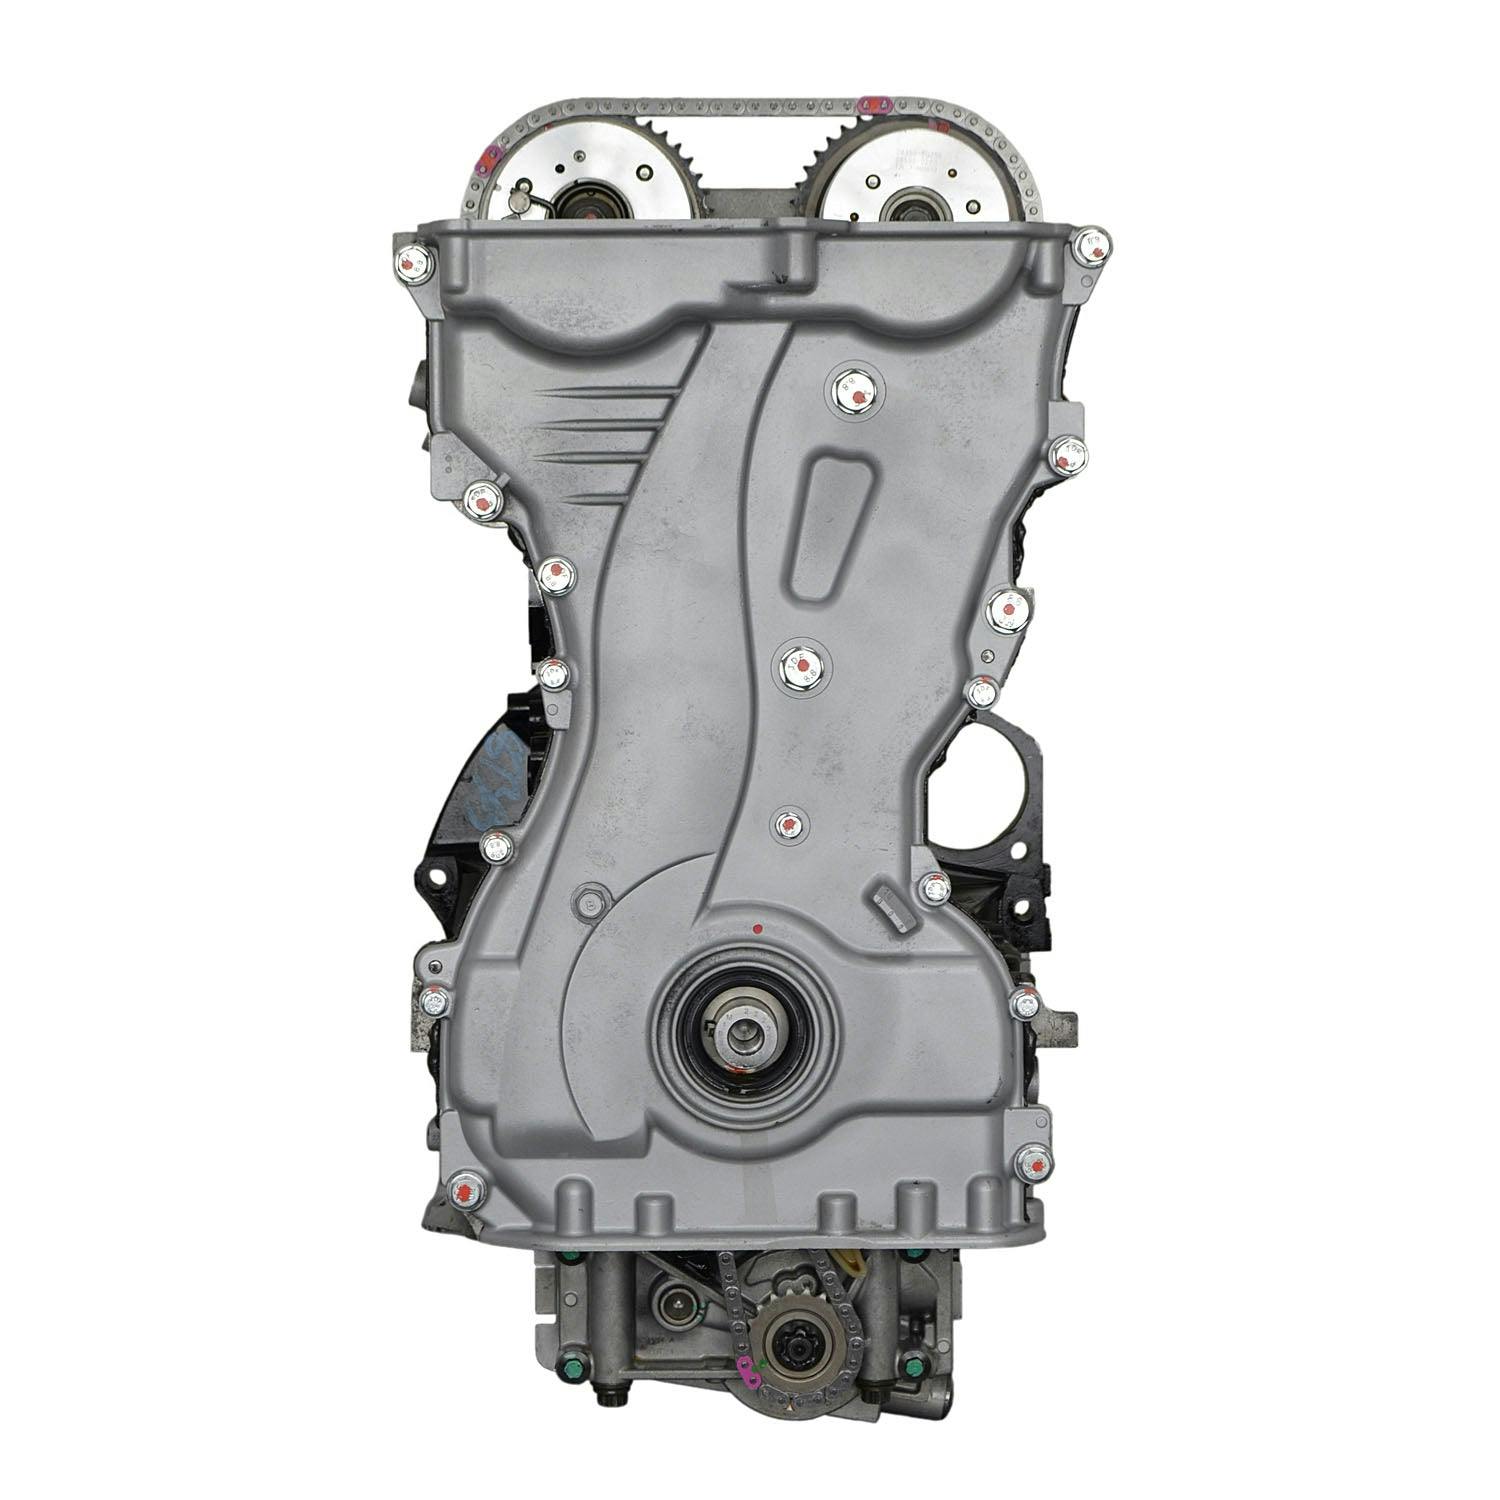 2.4 Liter Inline-4 Engine for 2011 Hyundai Motor Corp Optima and Sonata Sedans